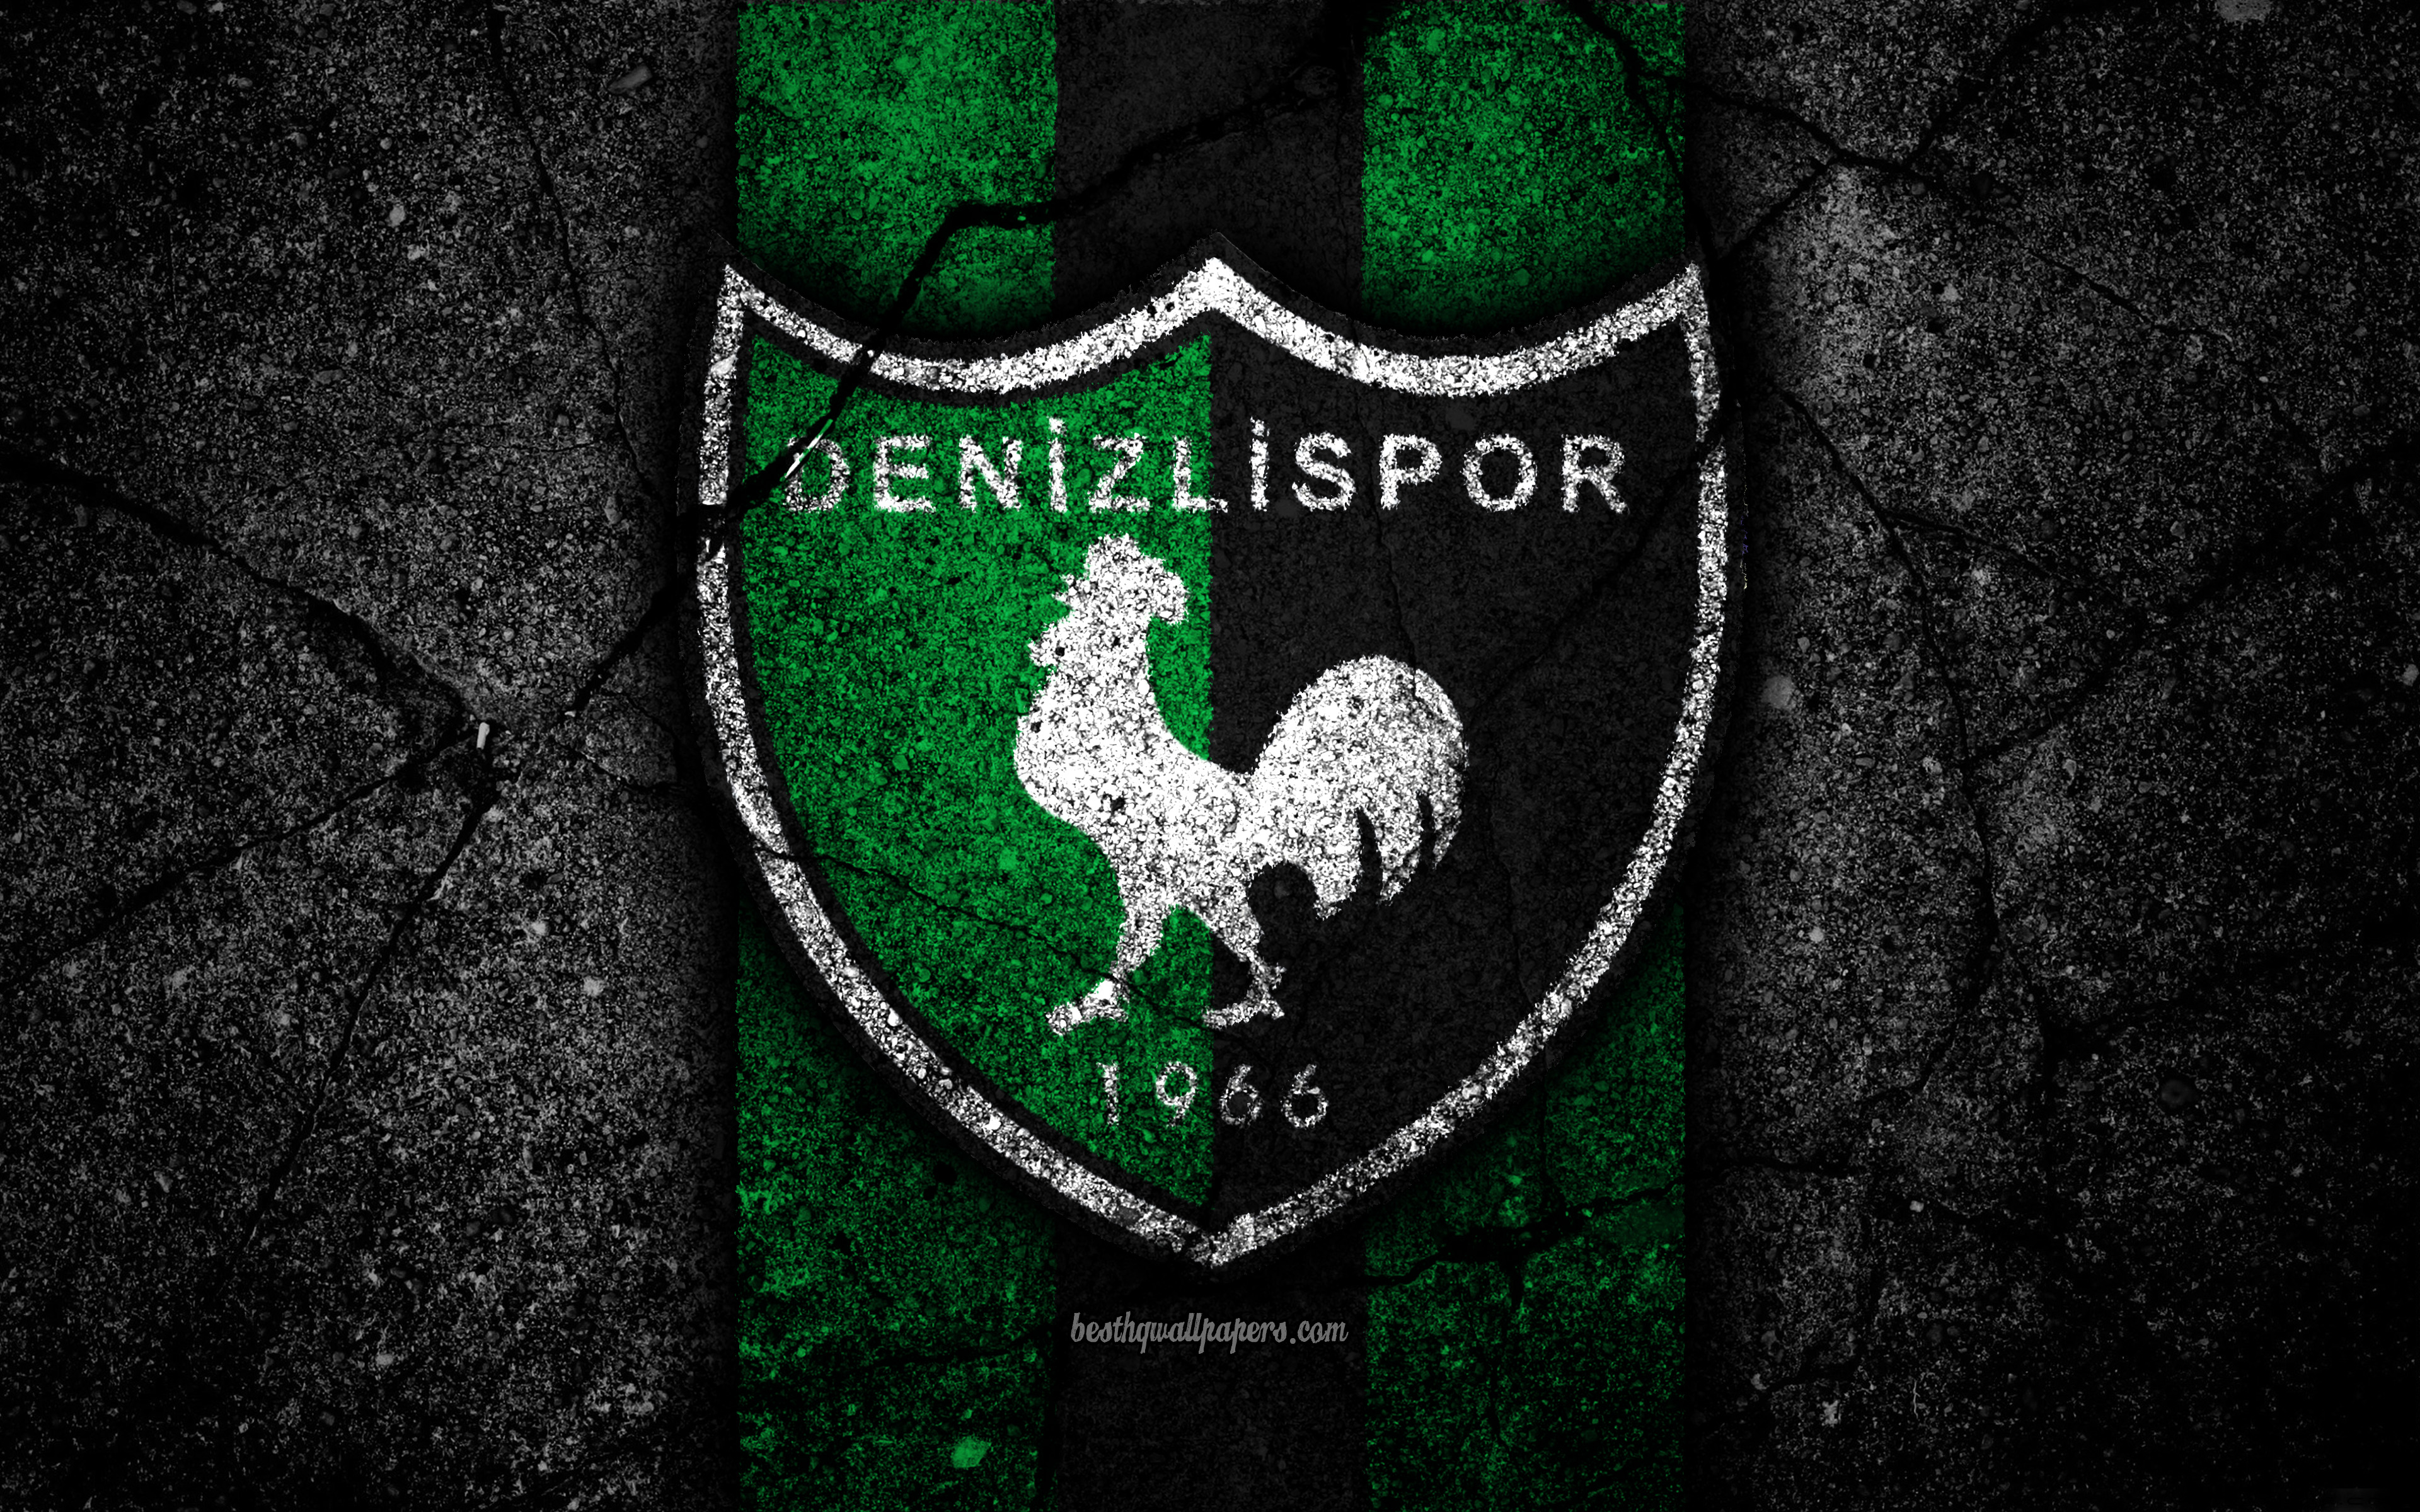 Denizlispor Wallpapers